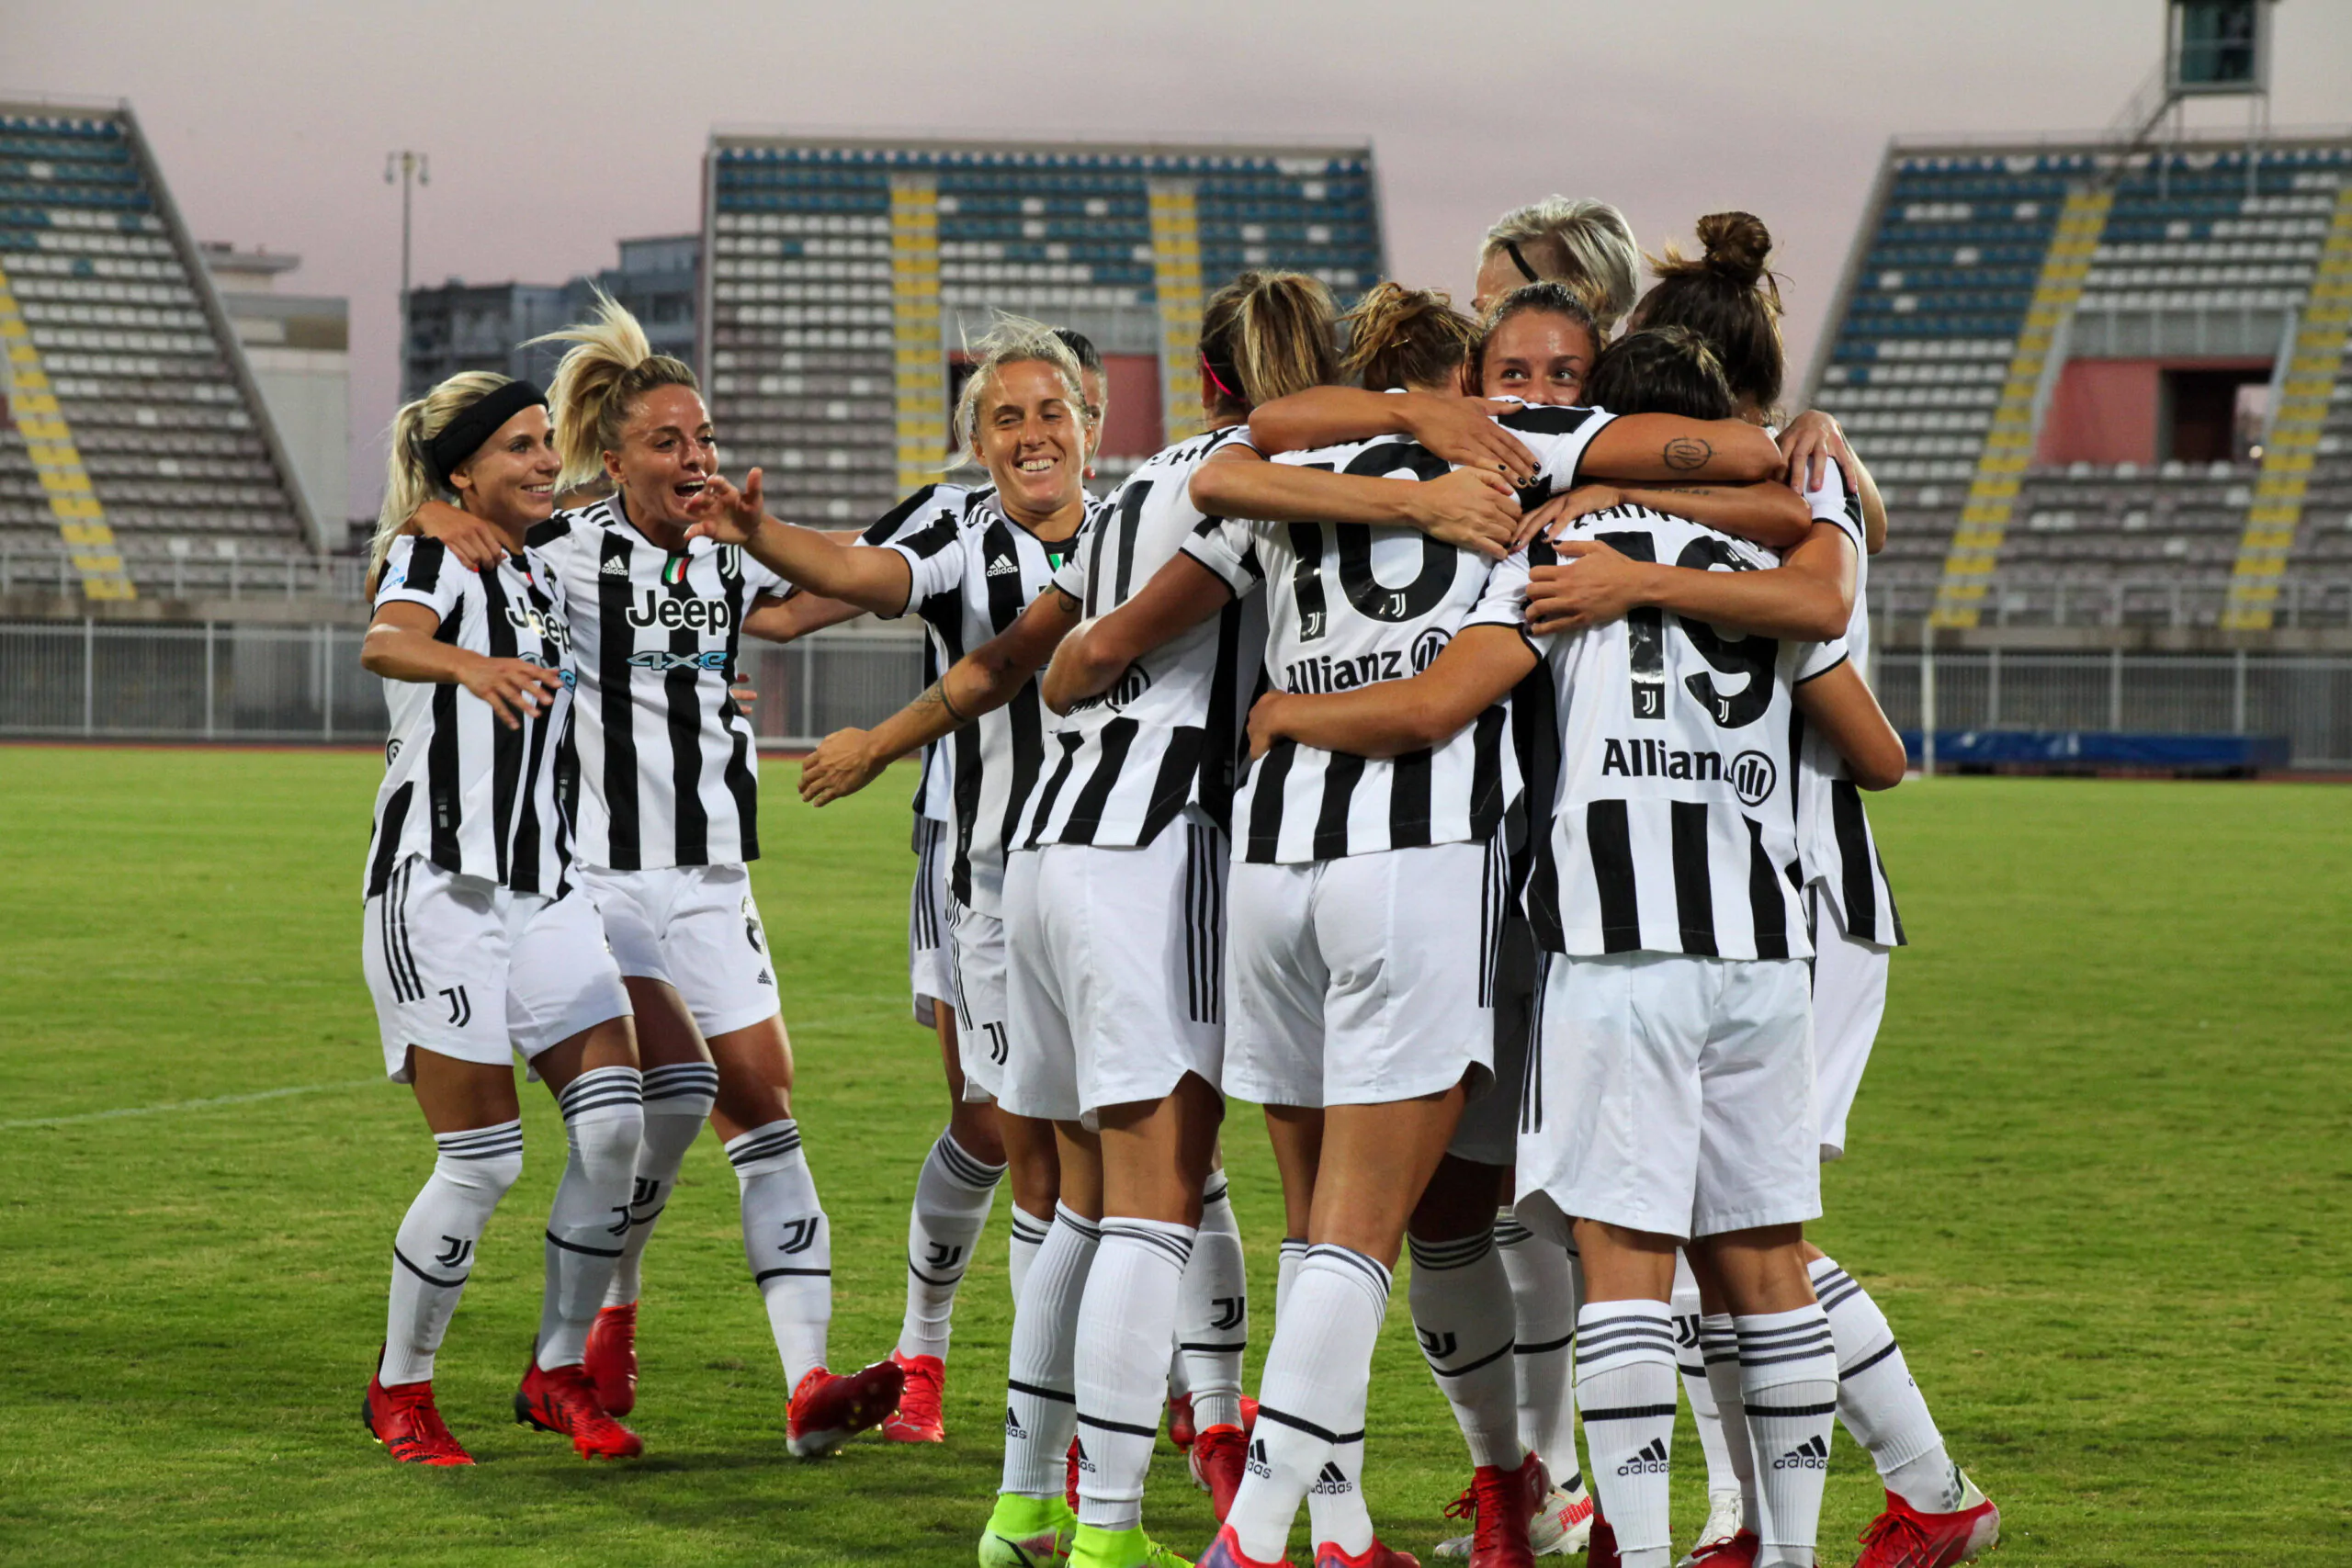 Juventus Women-Vllaznia 1-0: bianconere qualificate alla fase a gironi